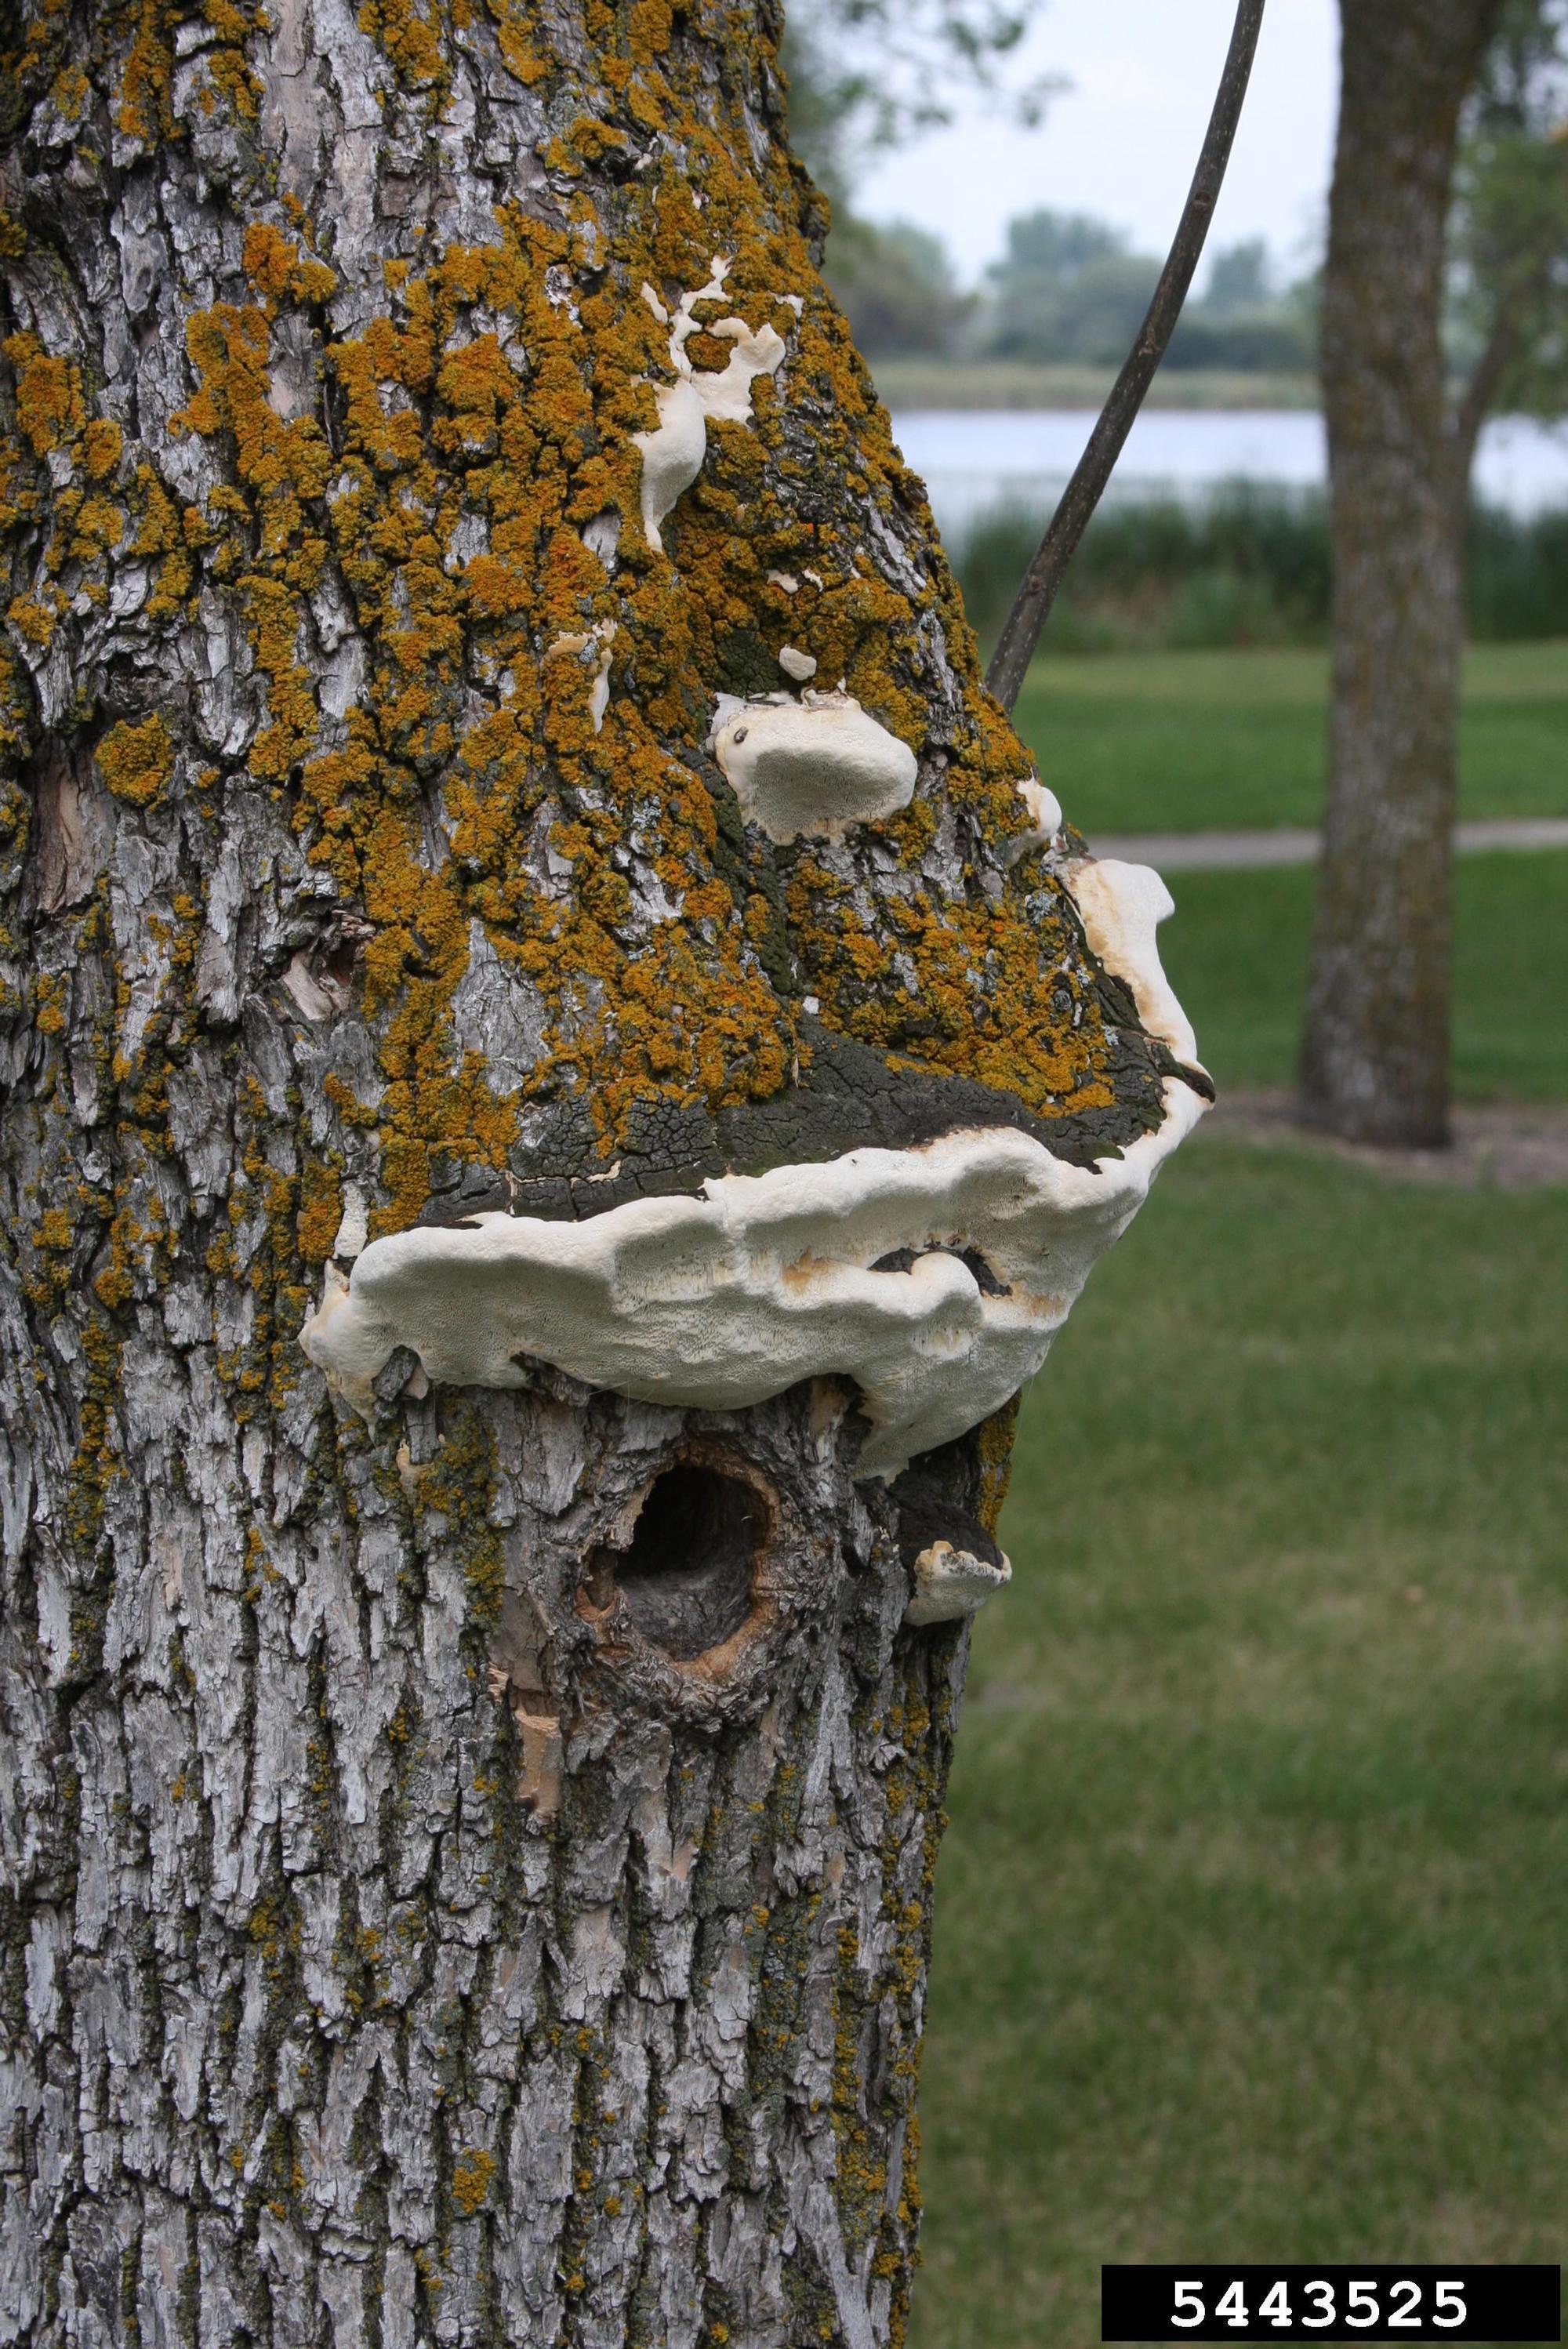 fungus bump on tree trunk